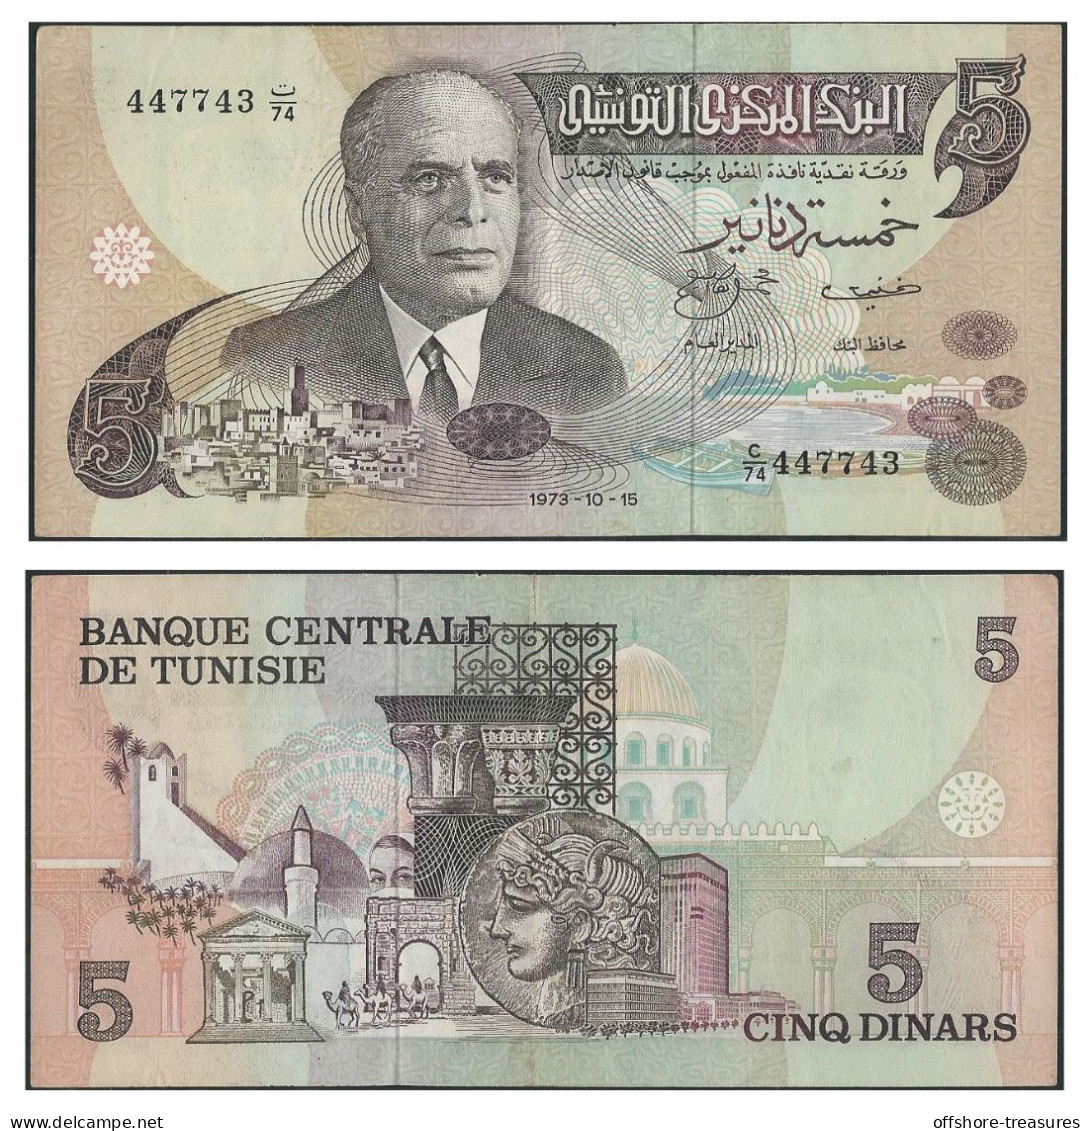 TUNISIA CENTRAL BANK FIVE DINAR 1973 BANKNOTE - TUNISIE BILLET 5 DINARS - TUNIS - Tunisie